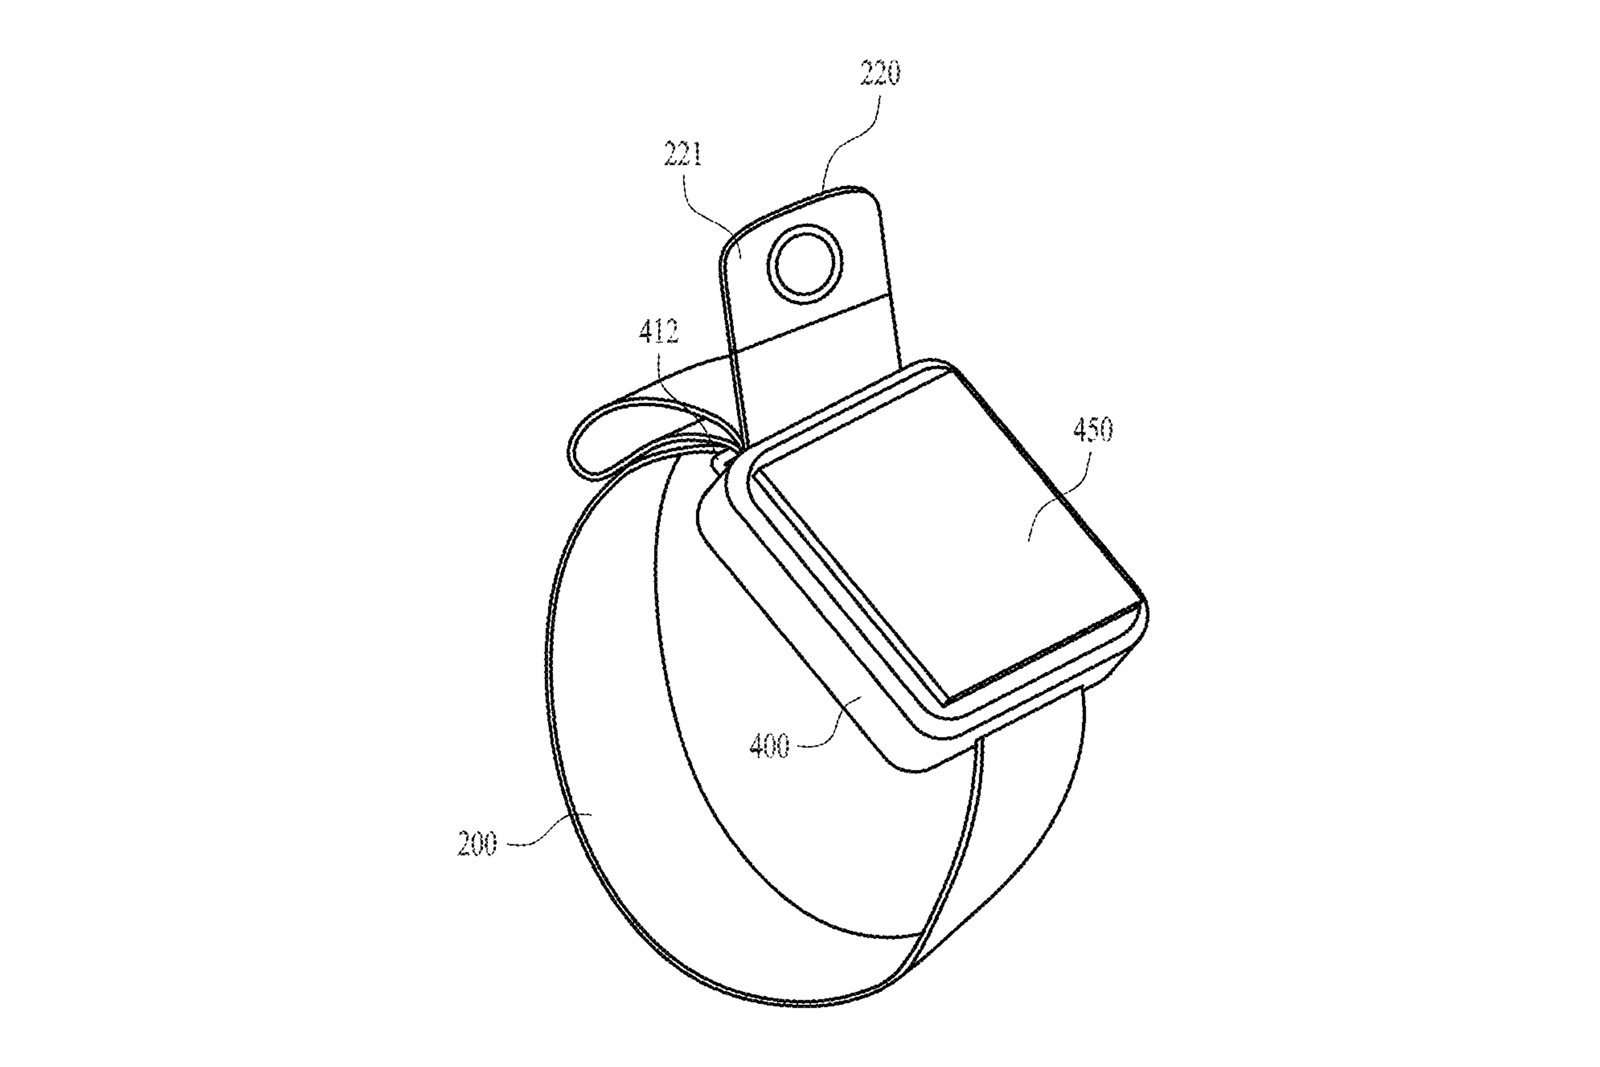 Apple Watch brevetto